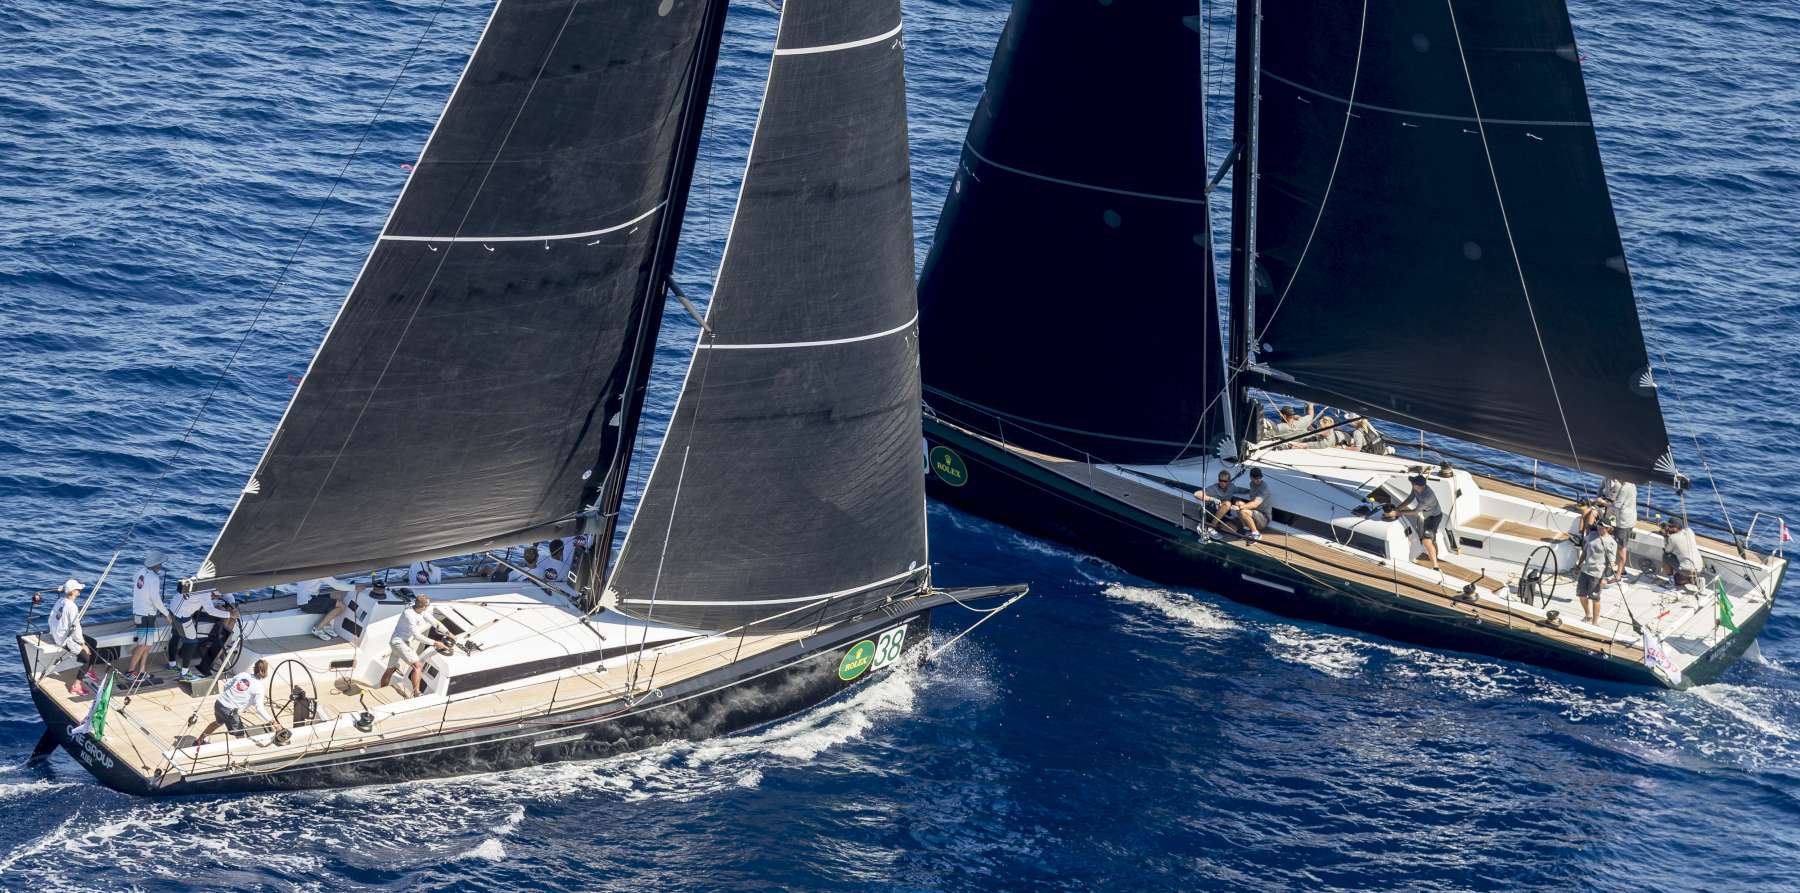 Light wind doesn't stop Rolex Swan Cup fleet - Press Release - Yacht Club Costa Smeralda